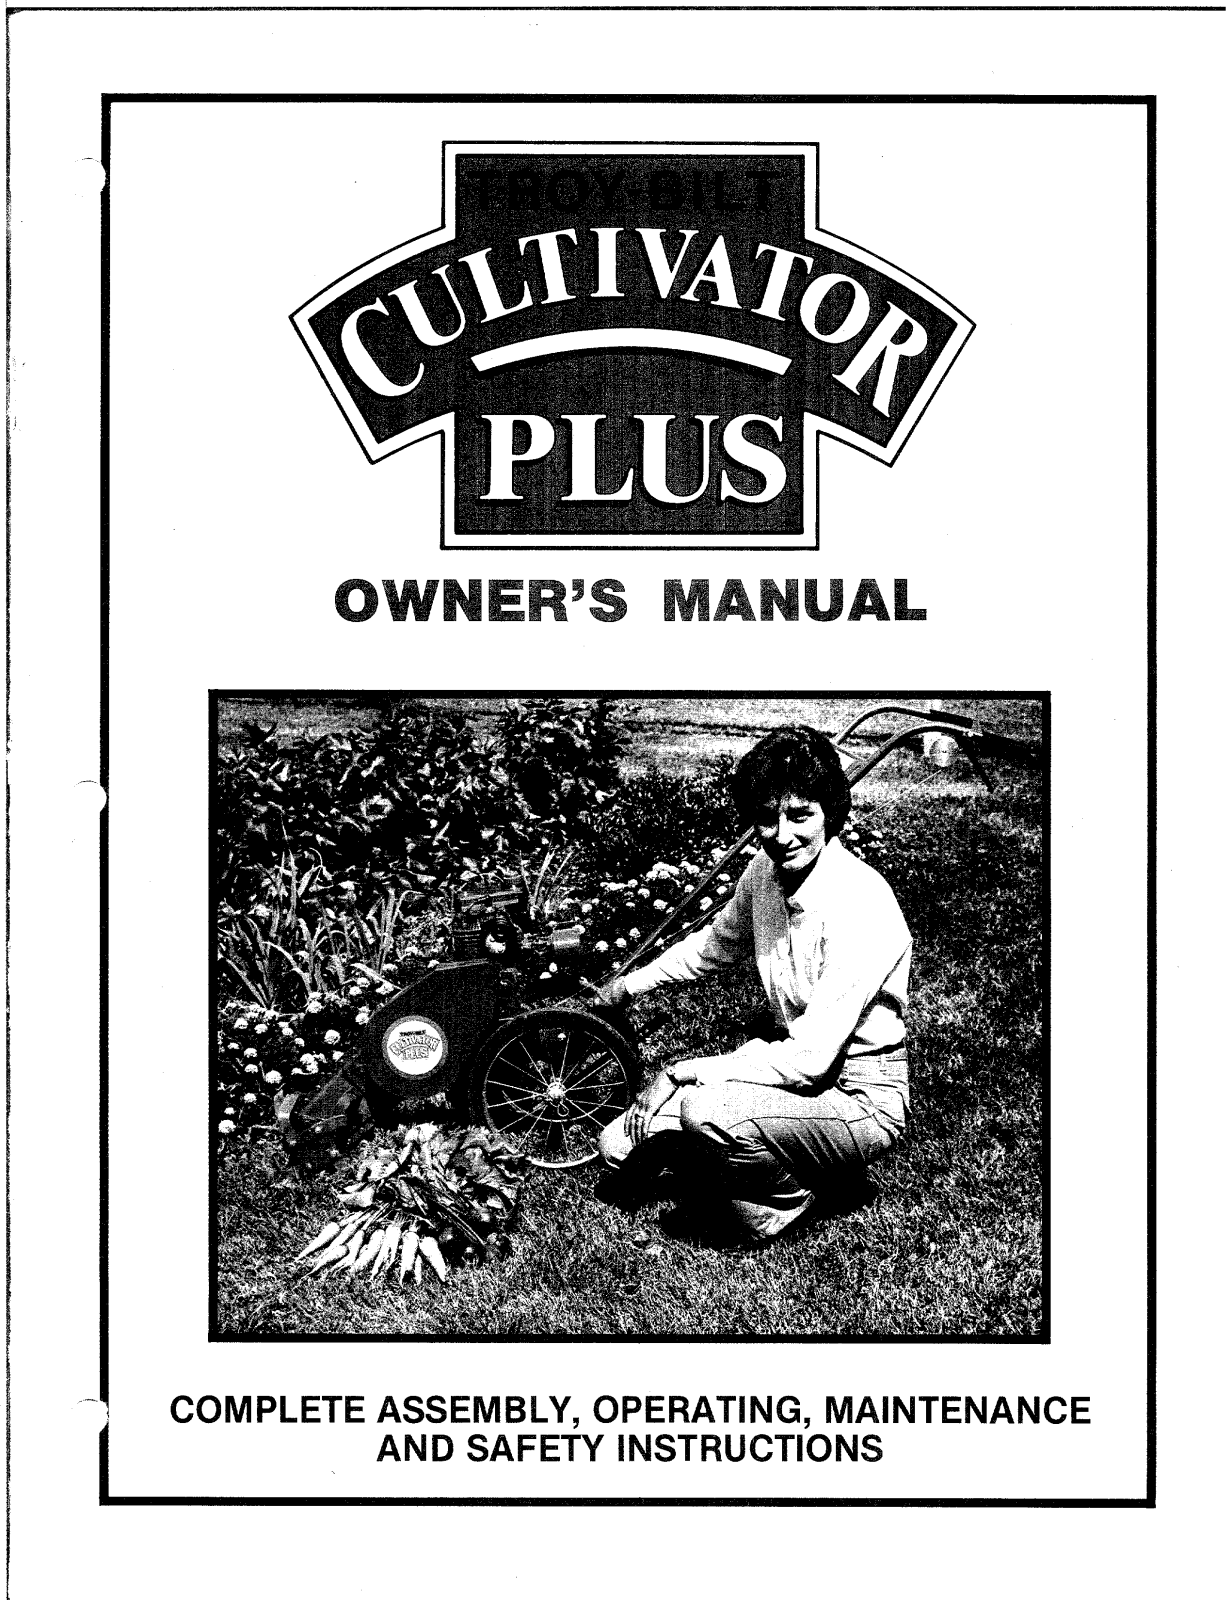 troy bilt cultivator plus owners Manual